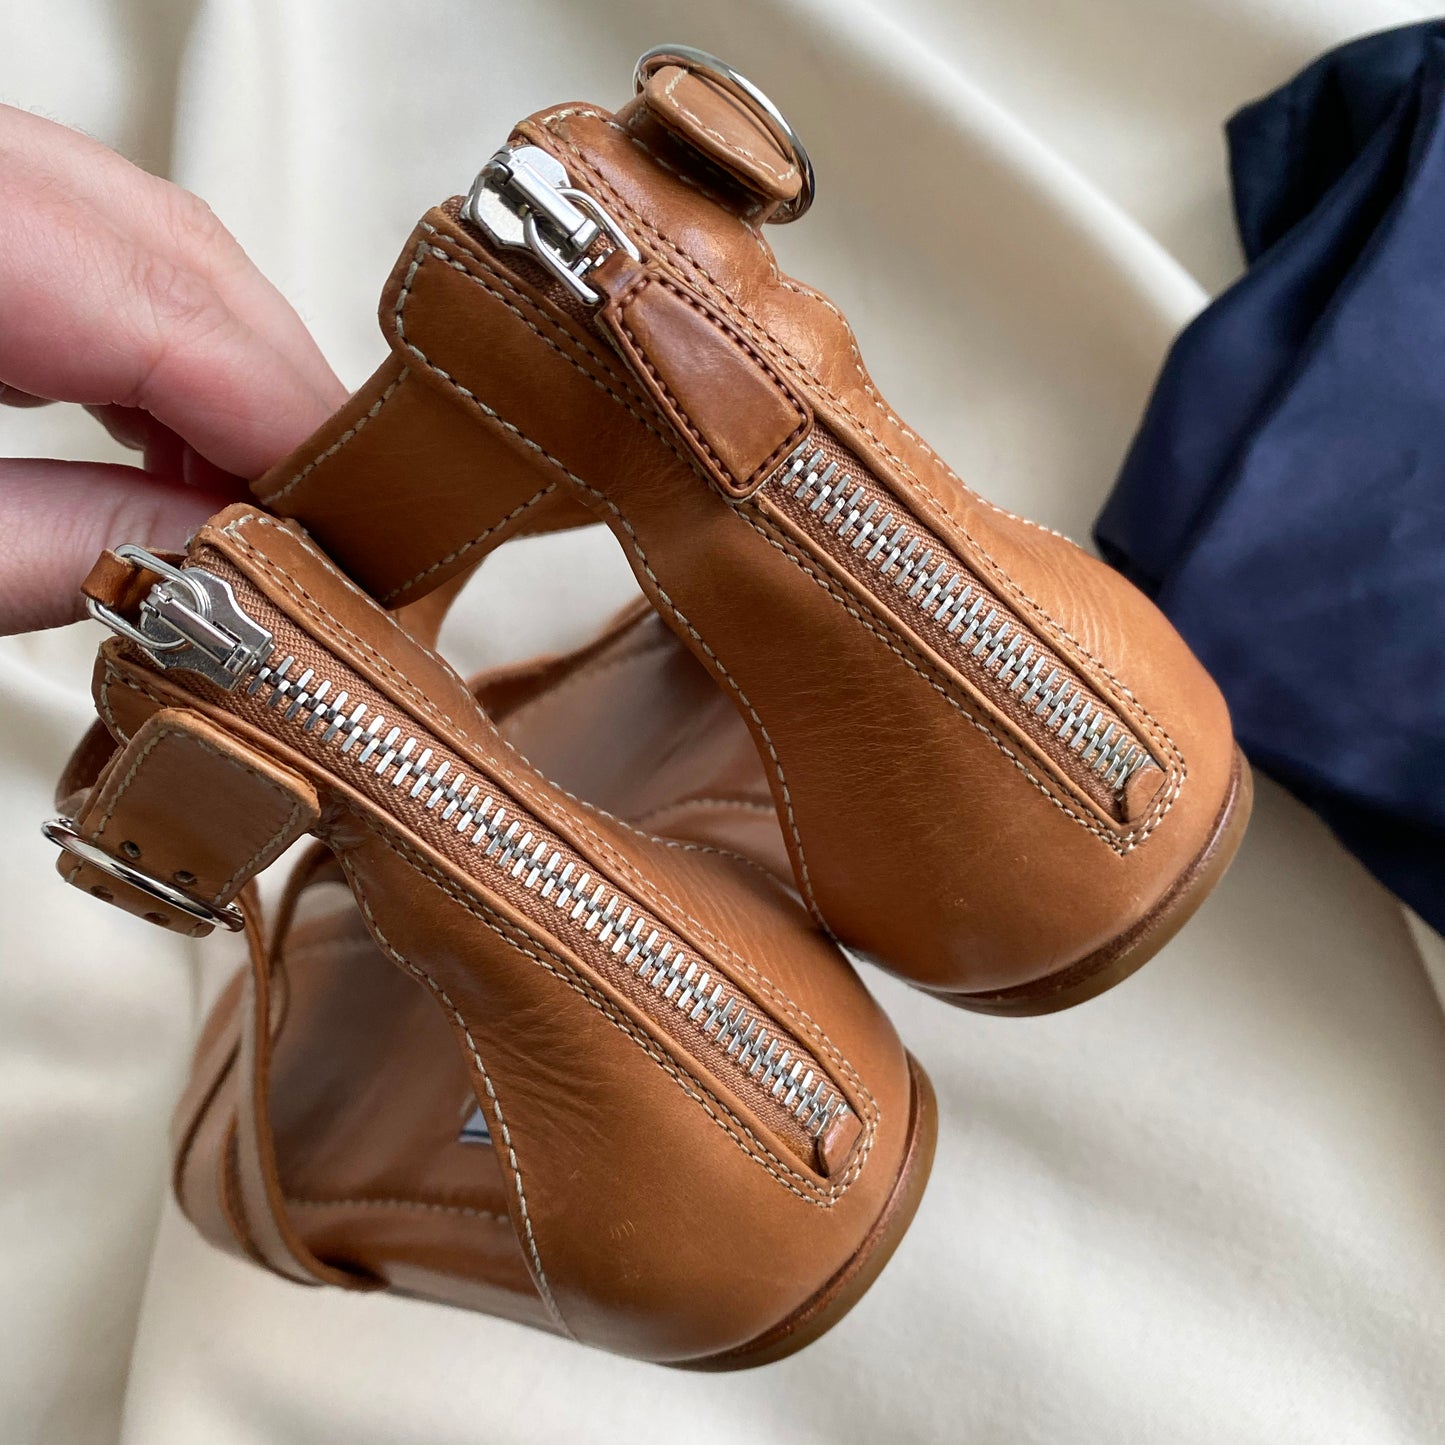 Prada Tan Leather Sandals, size 37.5